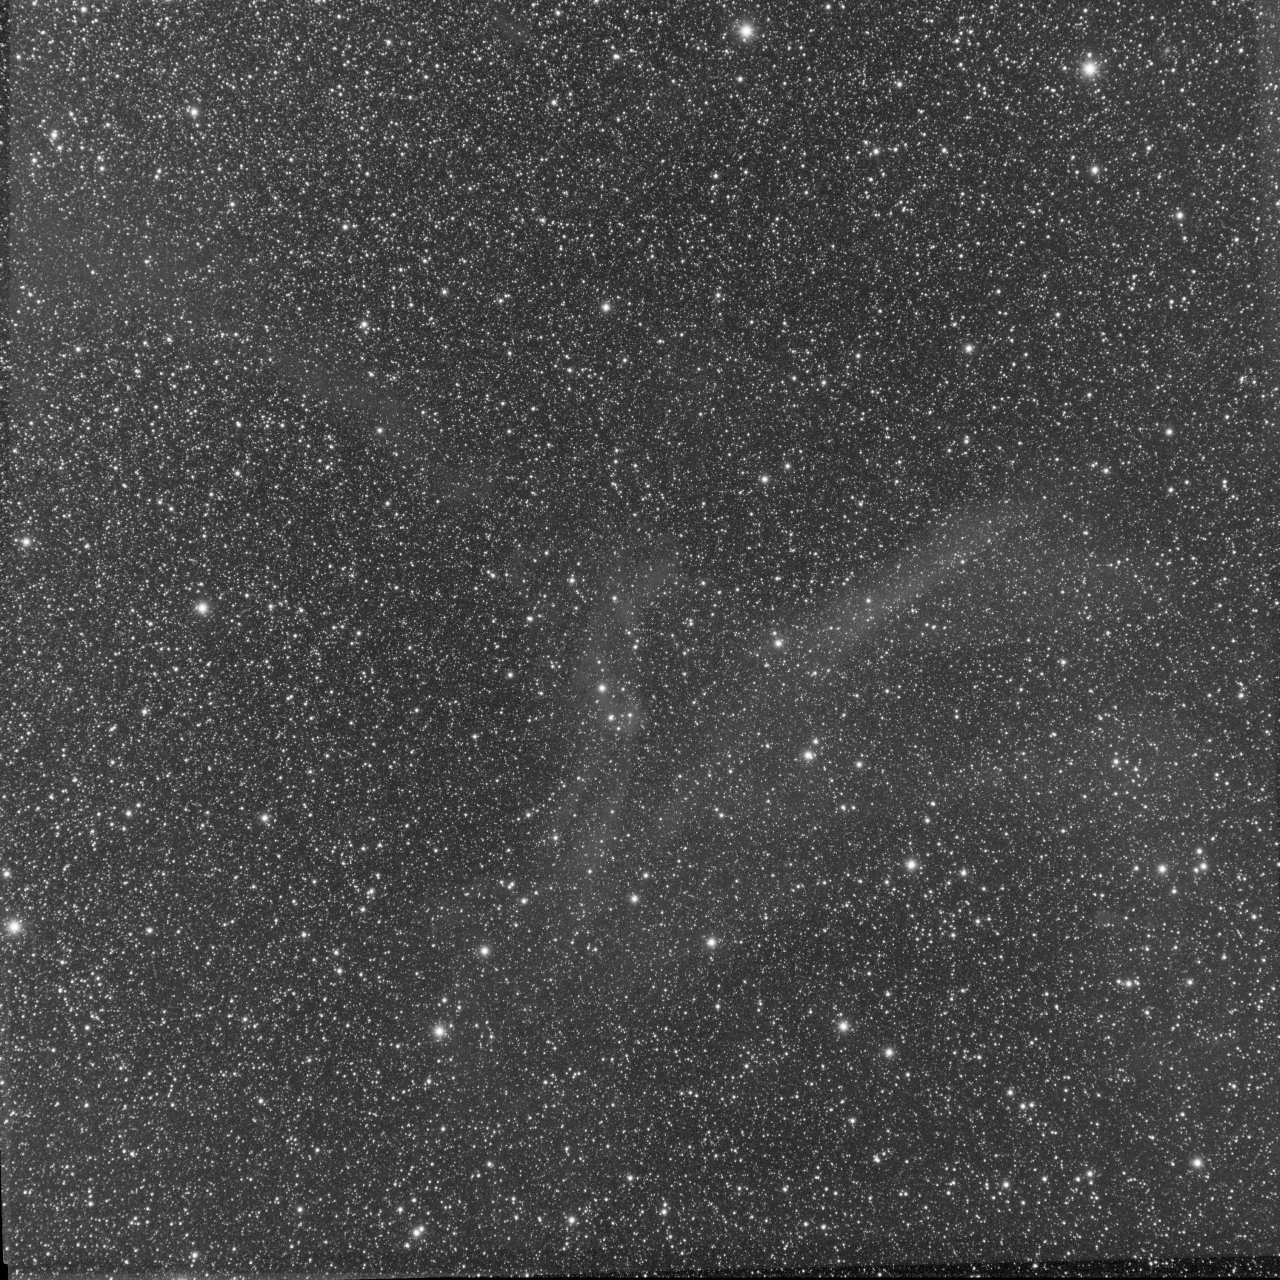 LBN 437 - Gecko Nebula Widefield - R